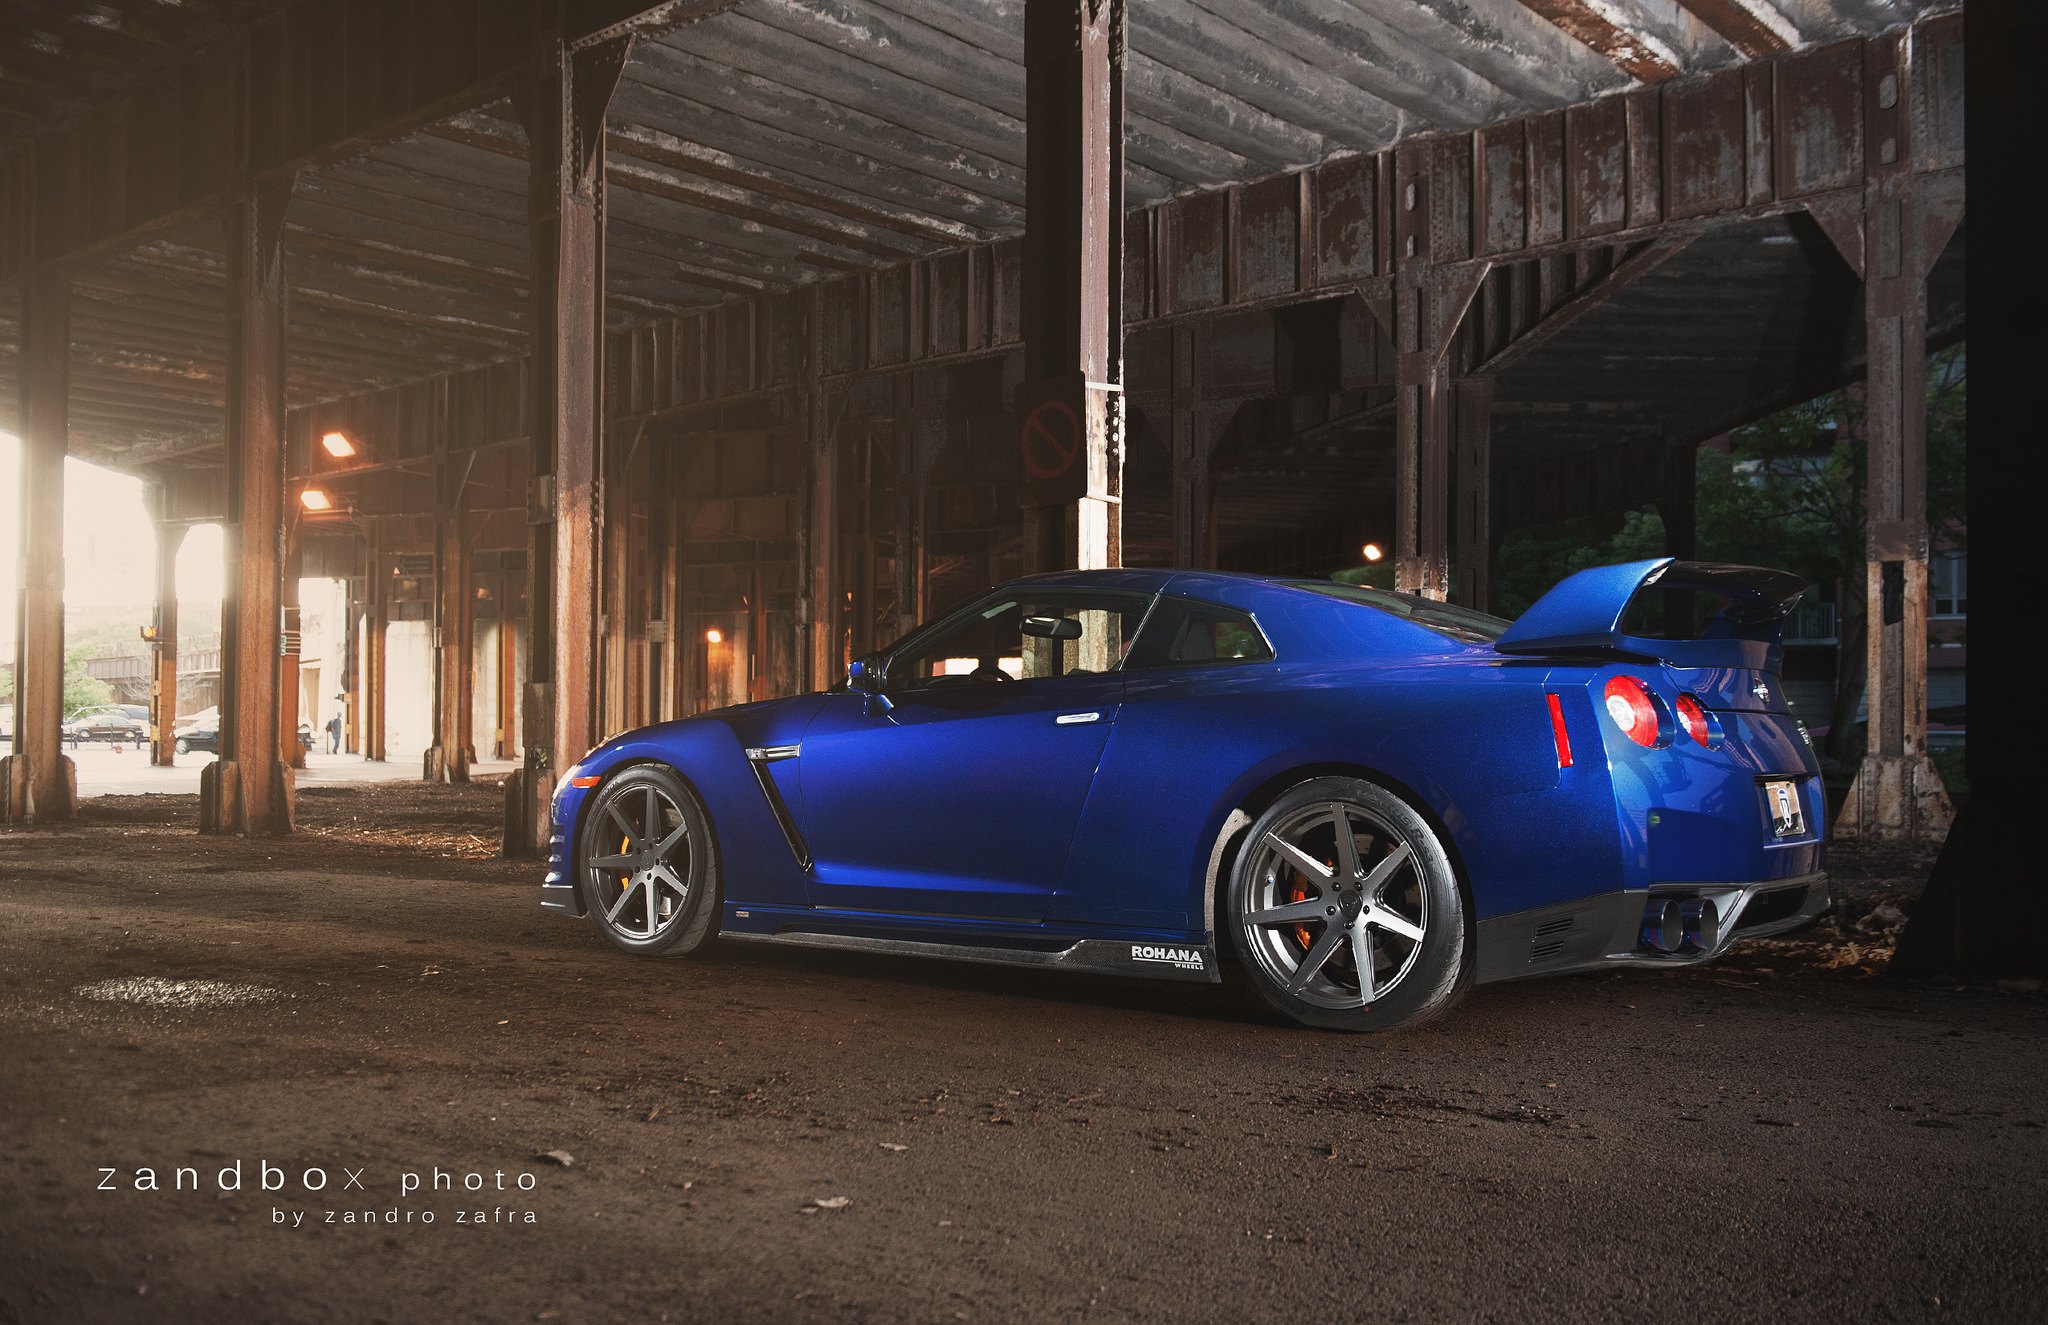 Custom Style Rear Spoiler on Blue Nissan GT-R - Photo by zandbox